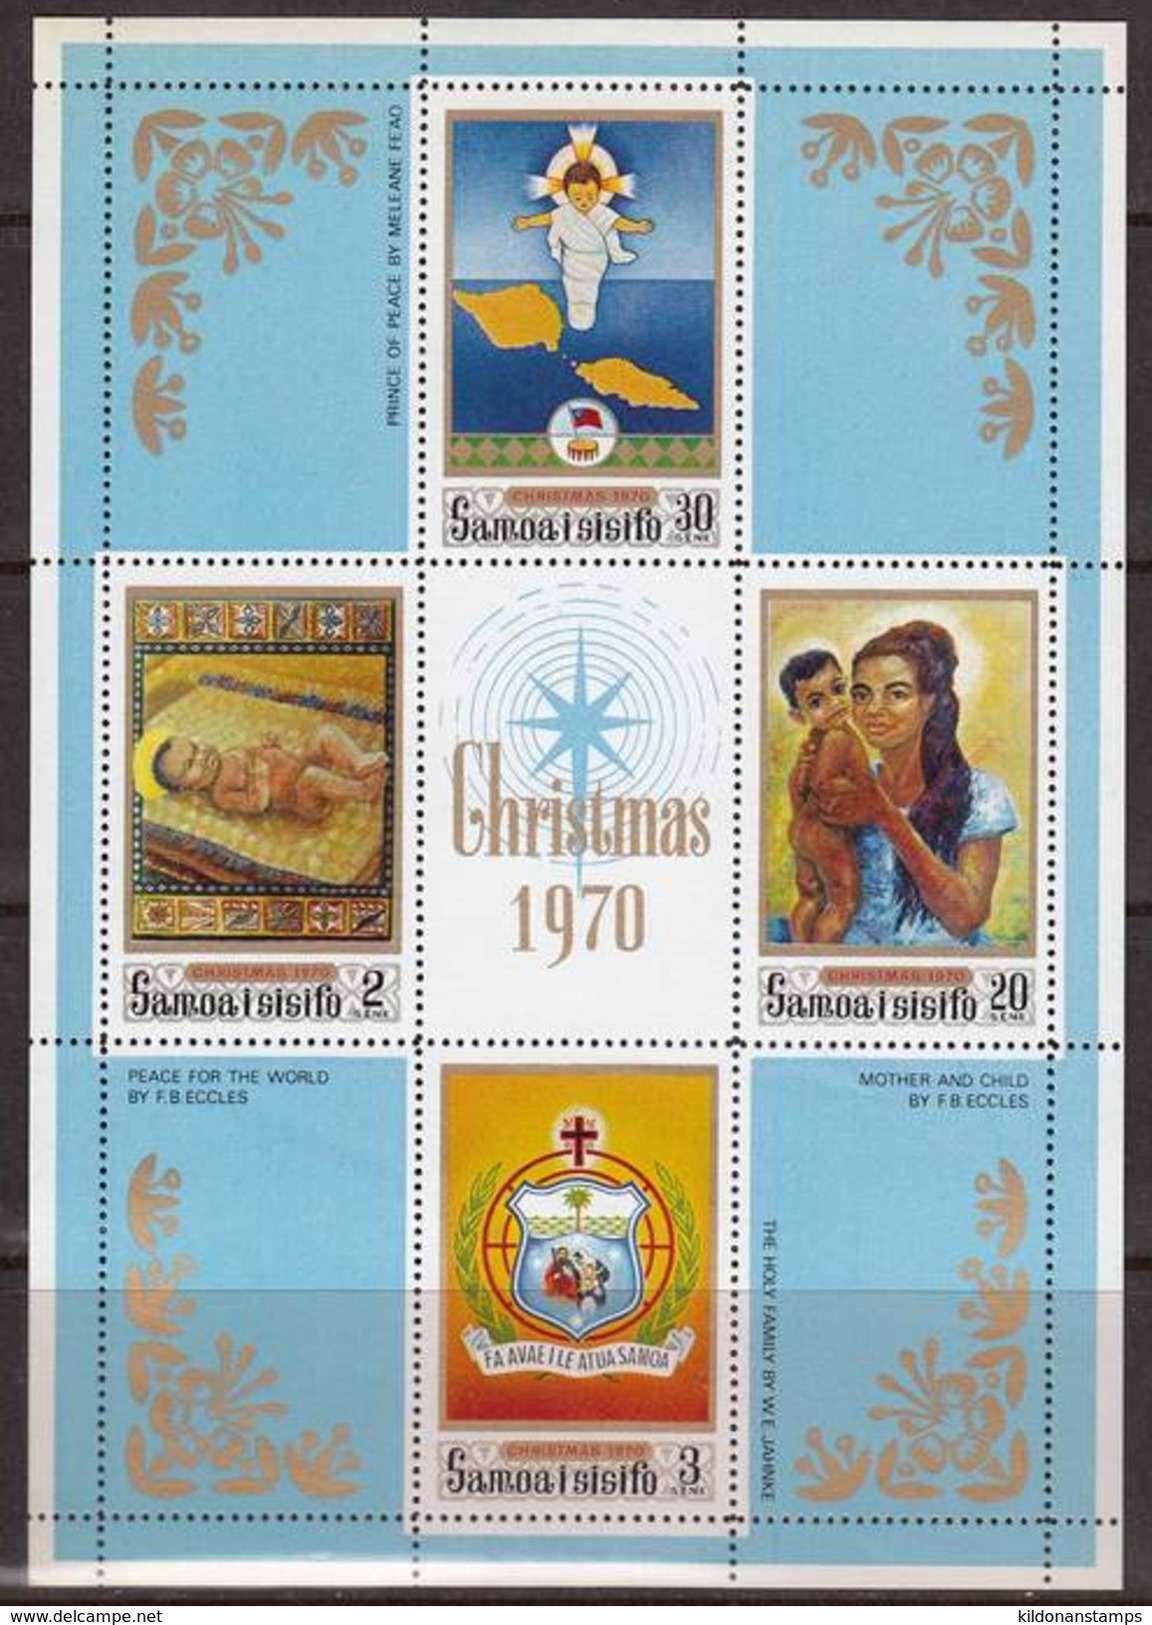 Samoa 1970 Christmas Minisheet, Mint No Hinge, Sc# 336a, SG MS357 - Samoa